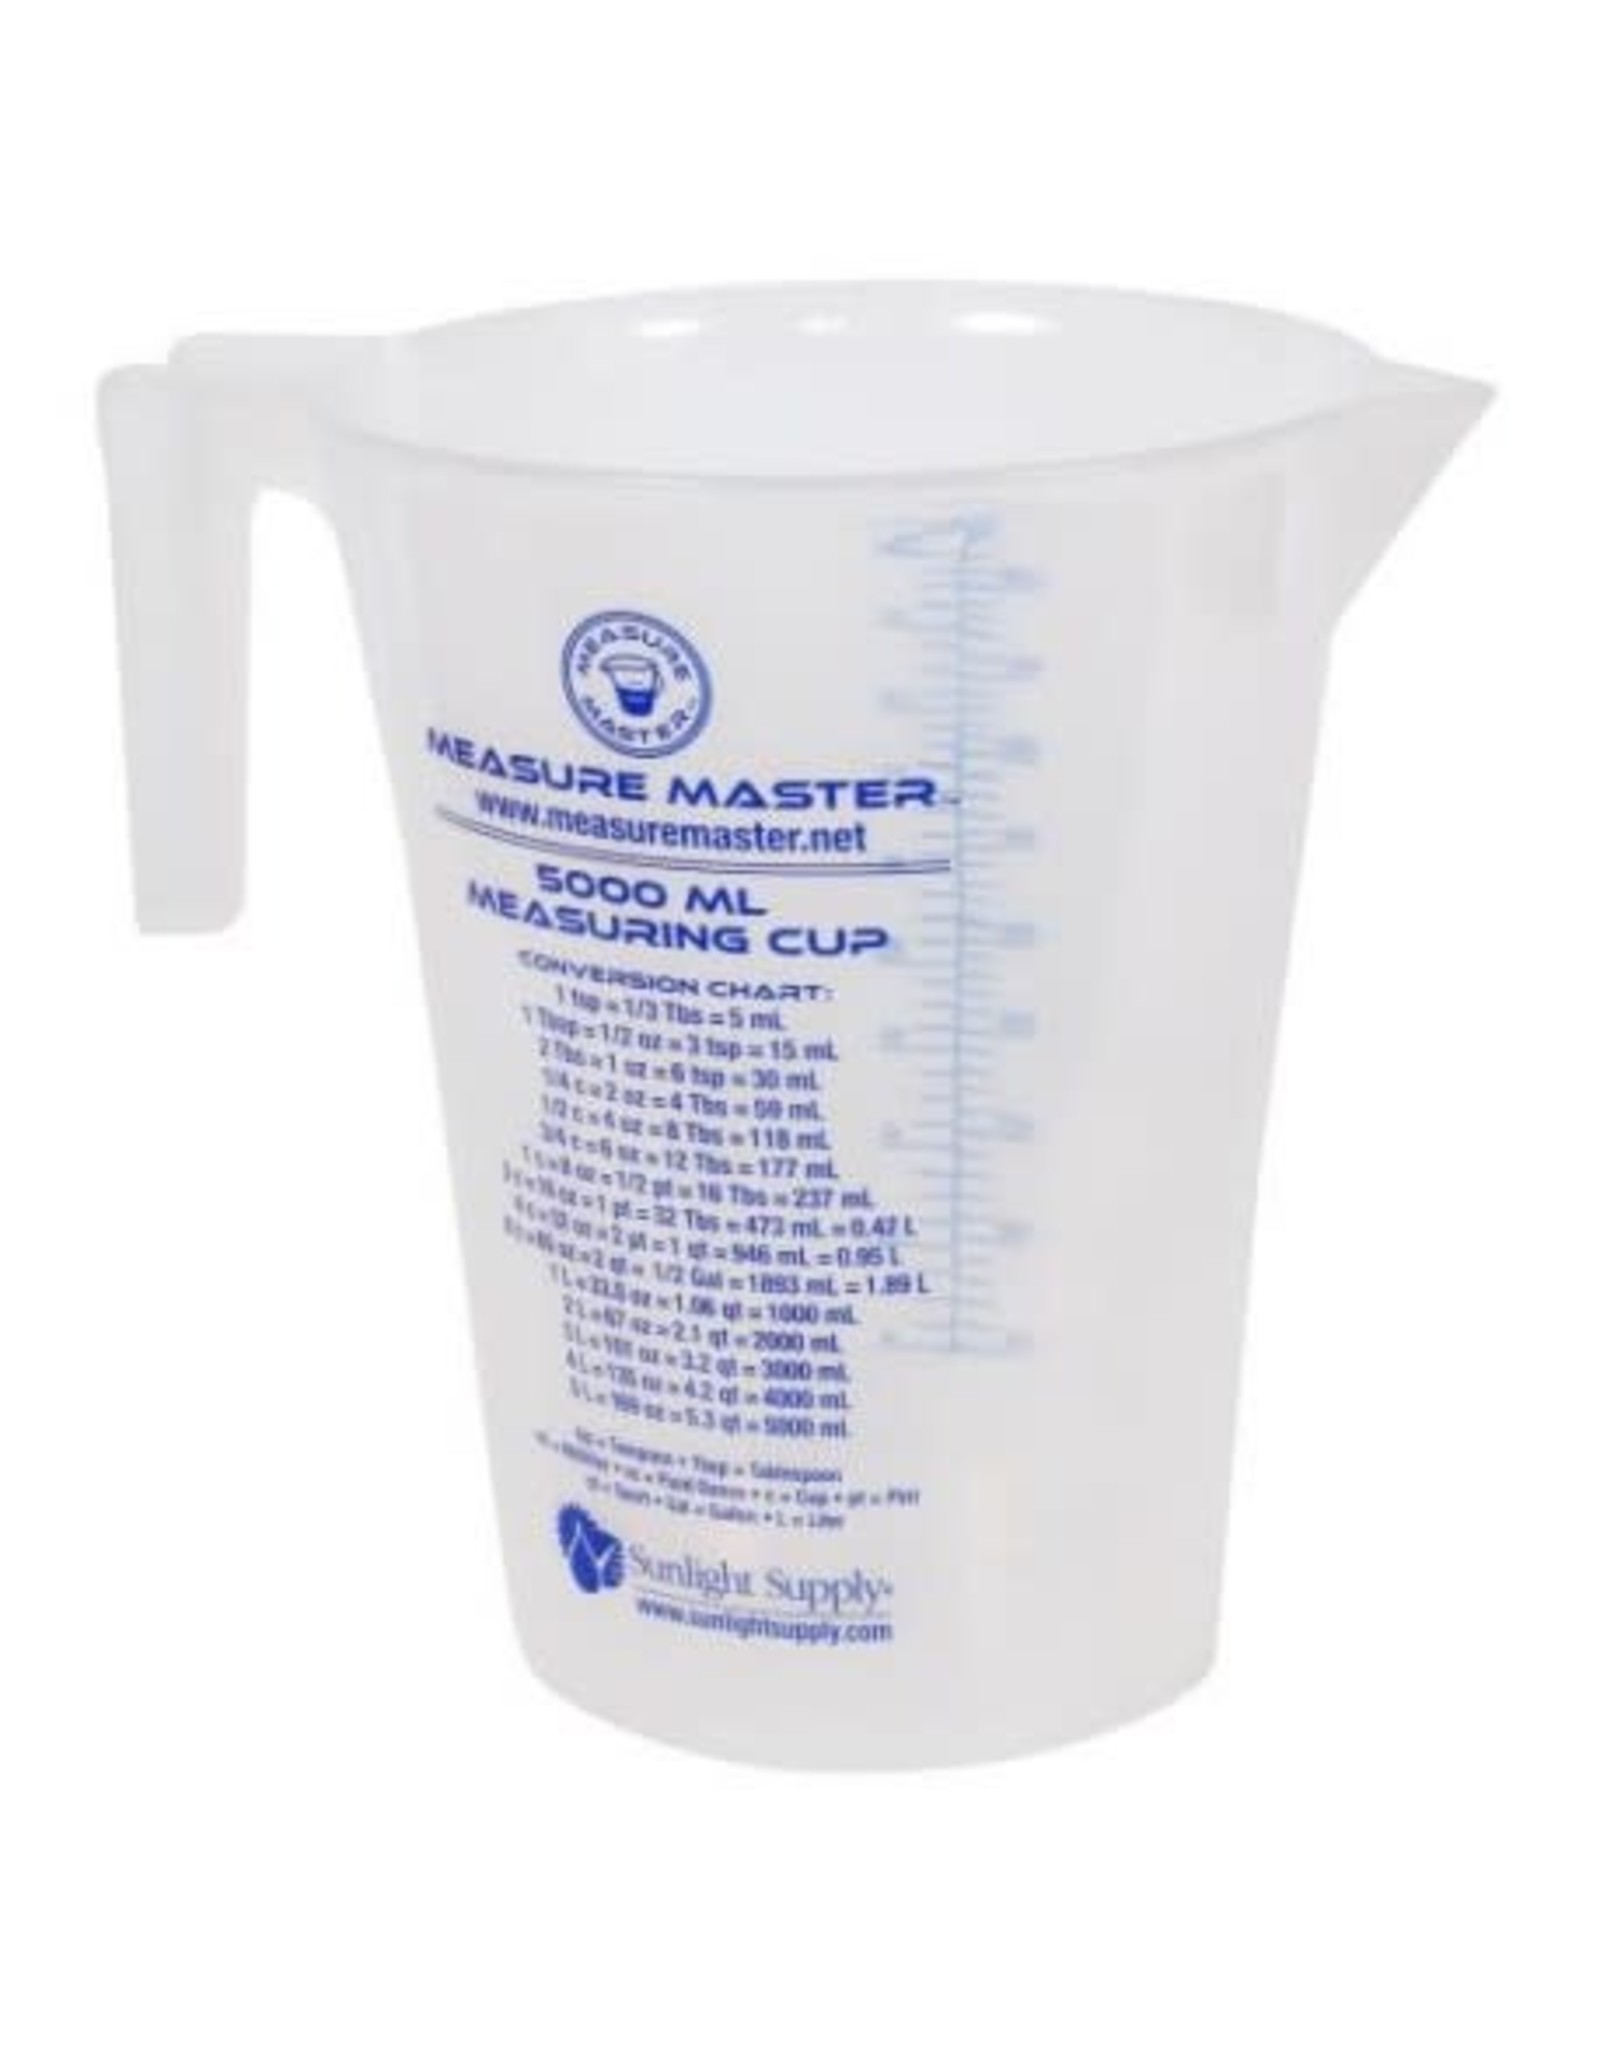 Measure Master Measure Master Graduated Round Container 160 oz / 5000 ml